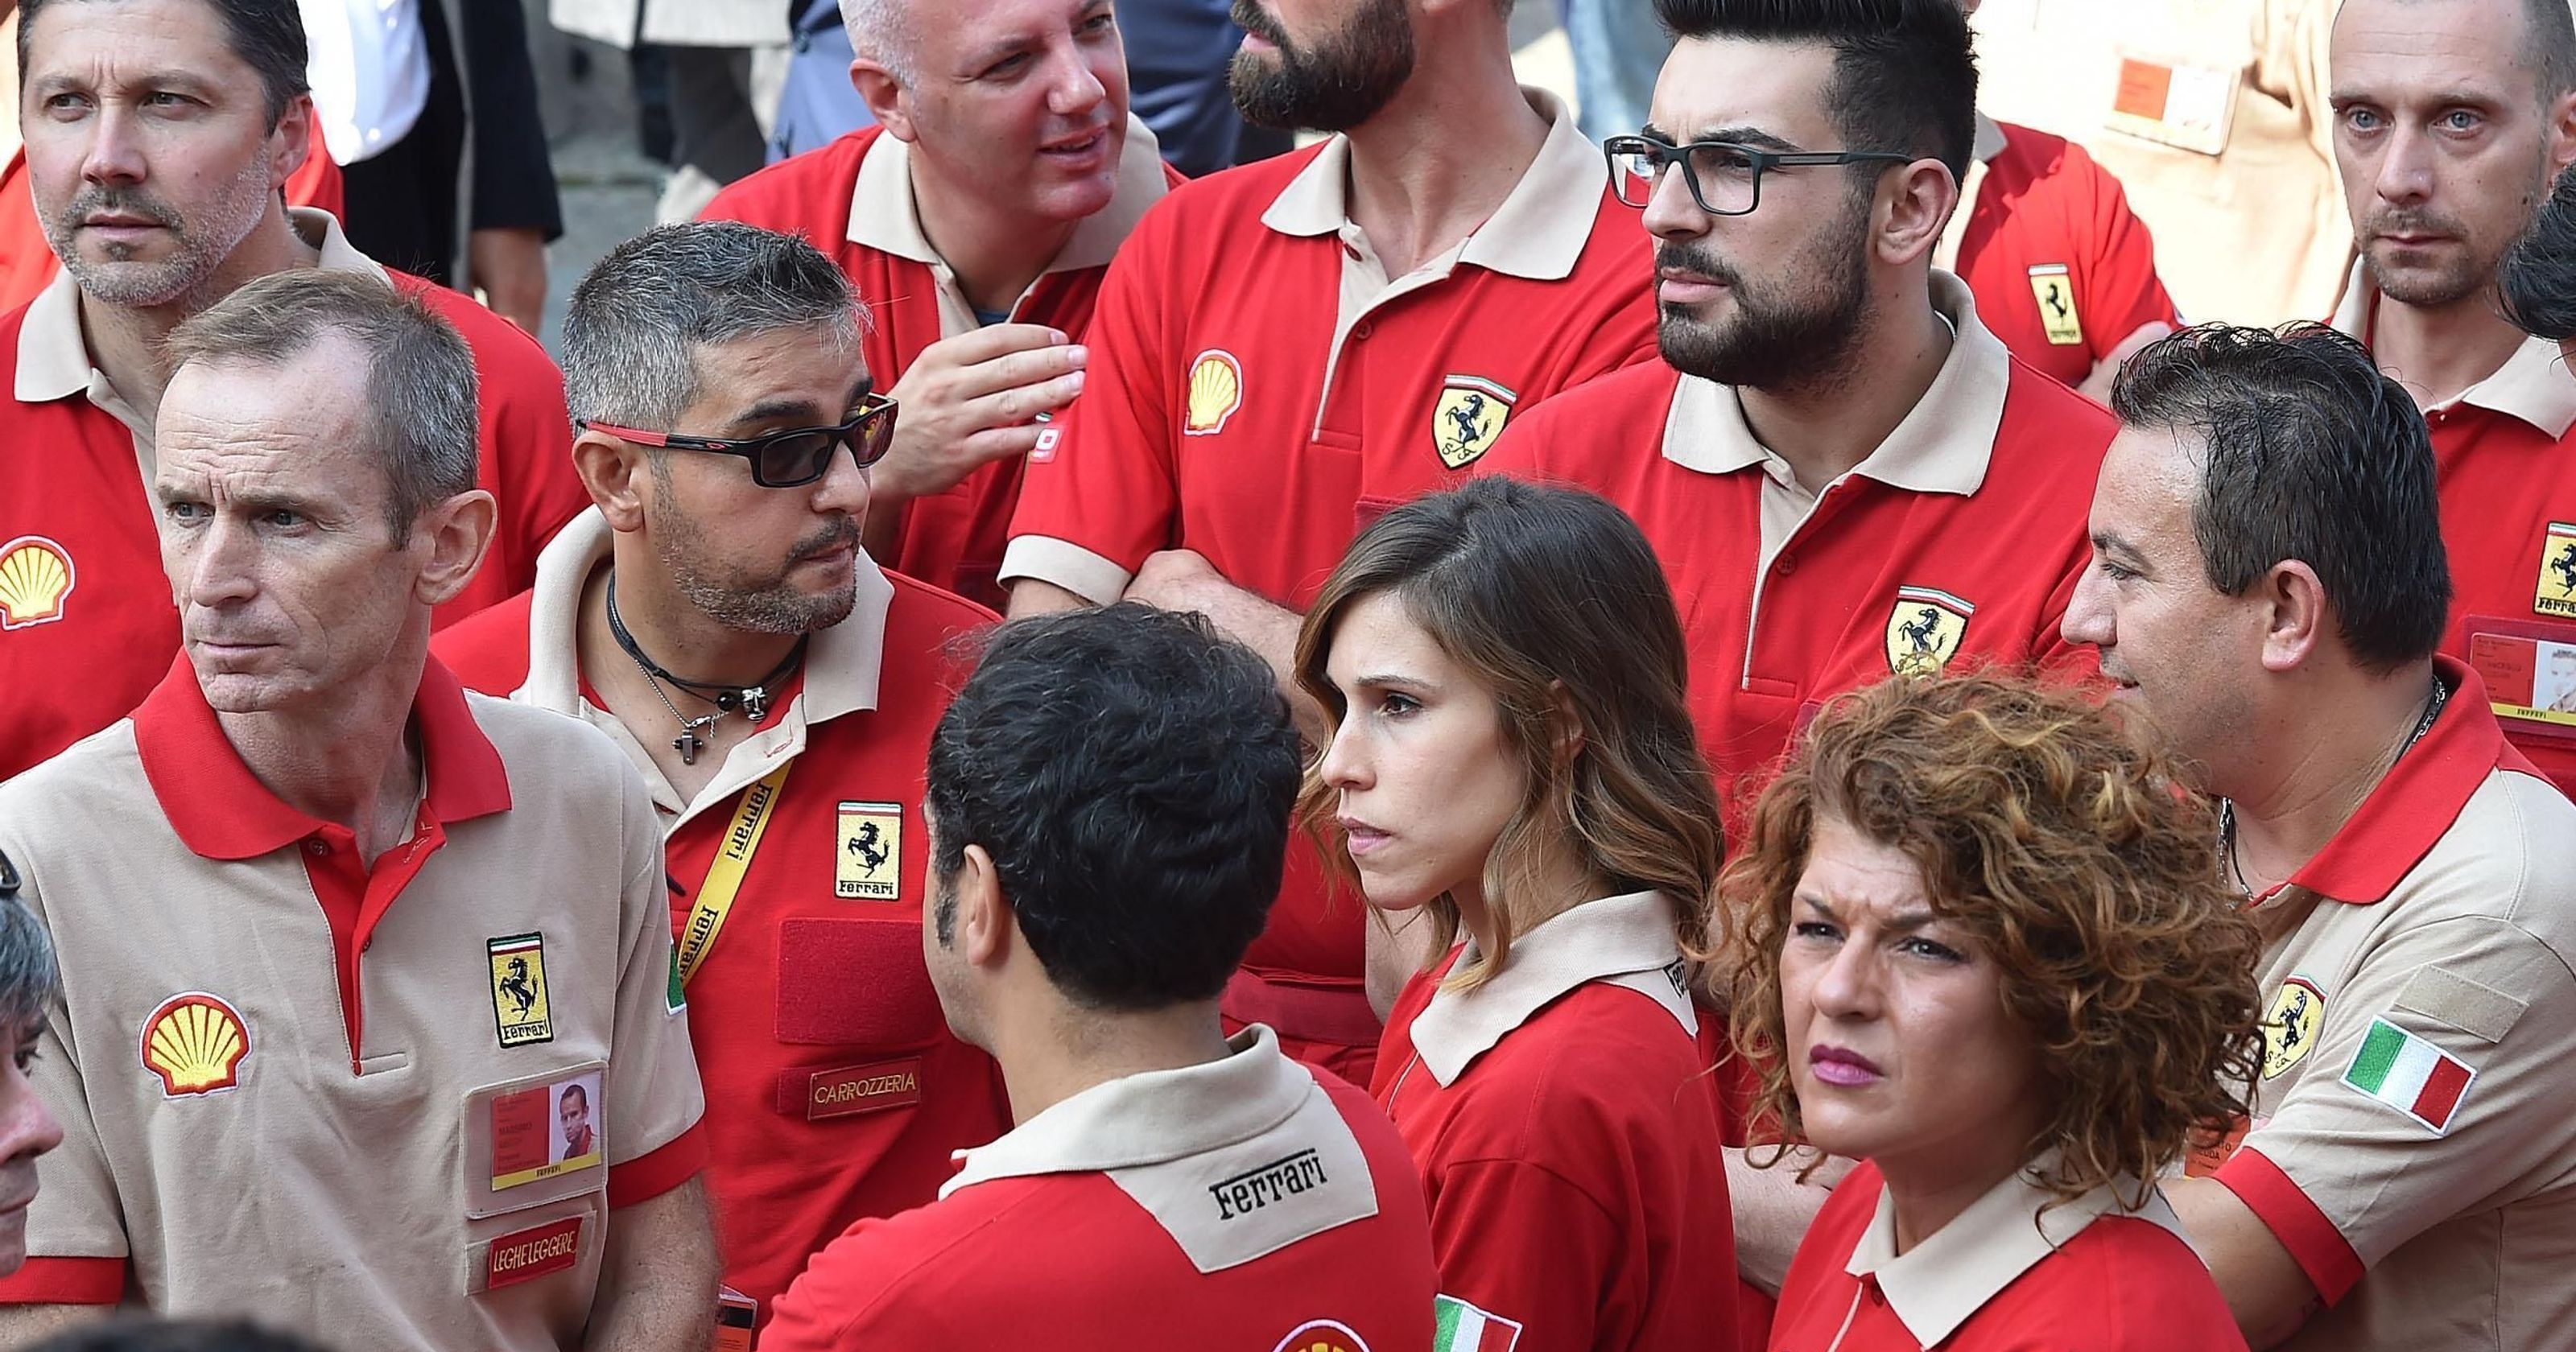 Ferrari employees in a cluster